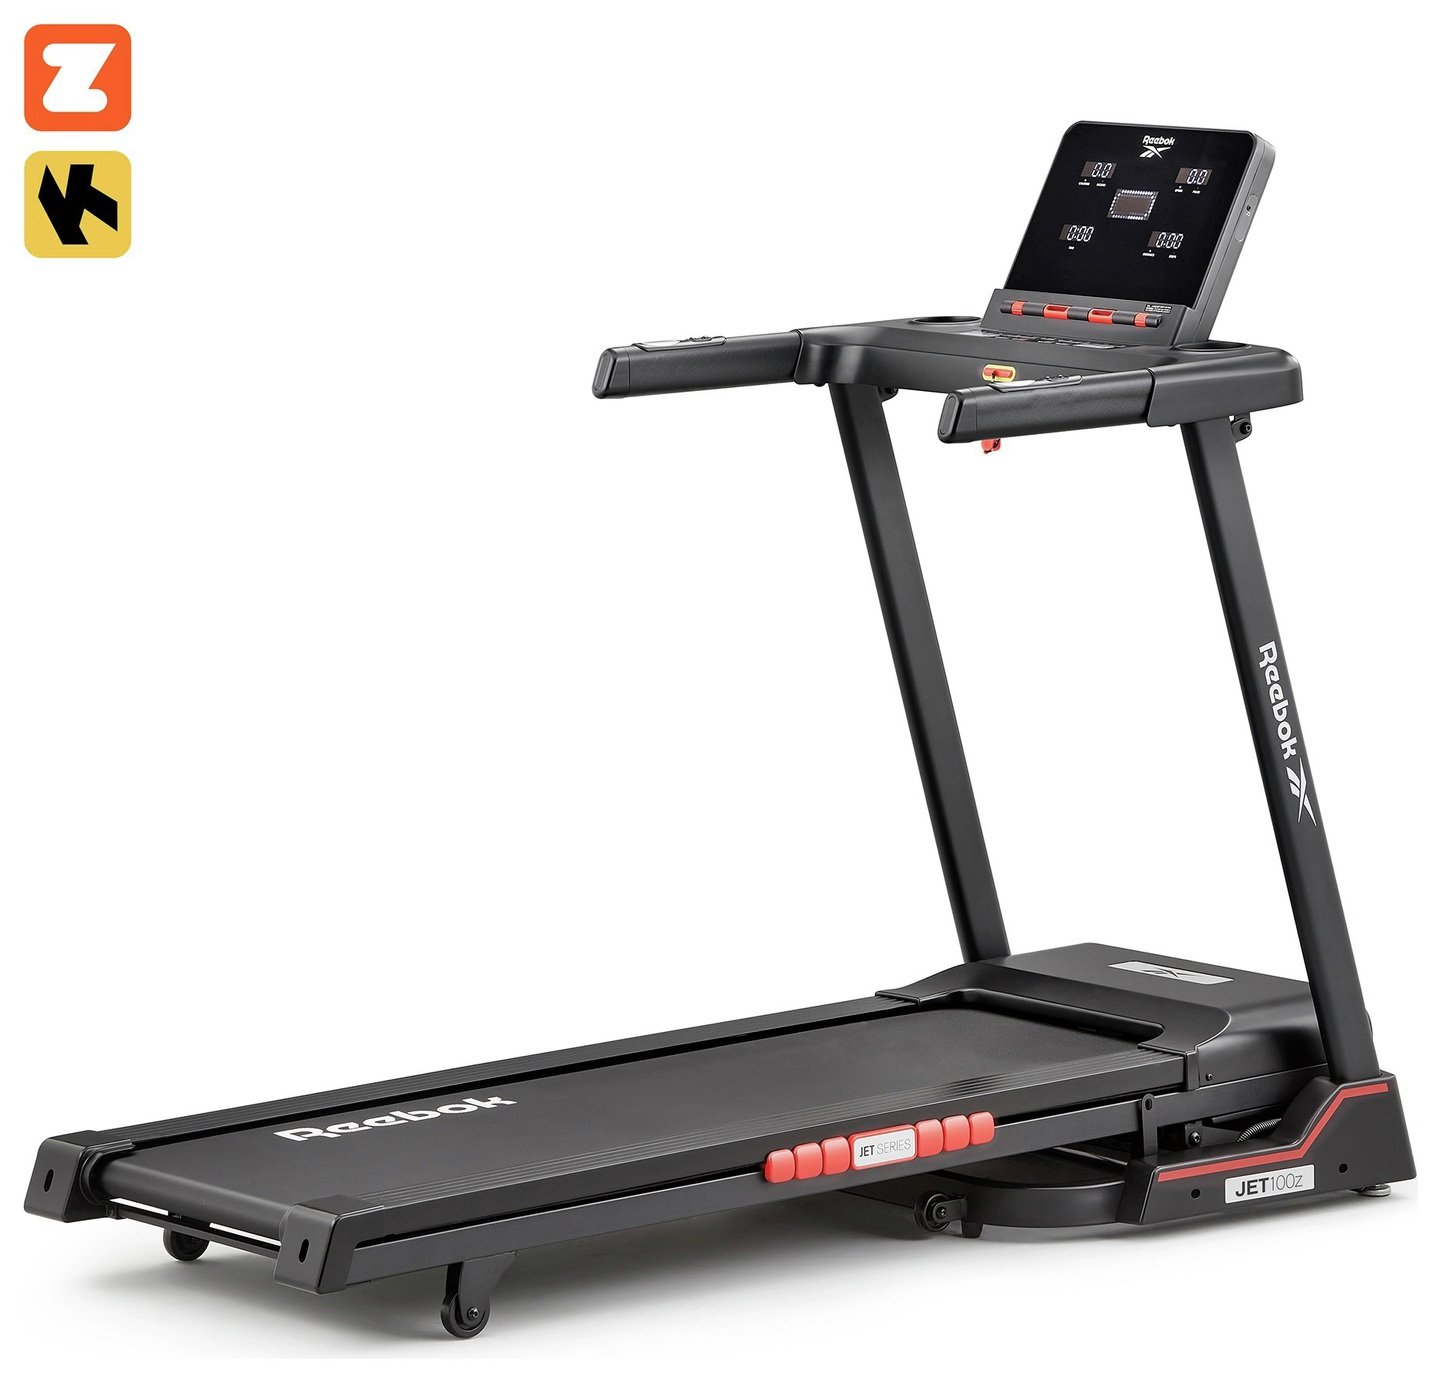 Reebok Jet 100z Folding Treadmill with Incline and Bluetooth